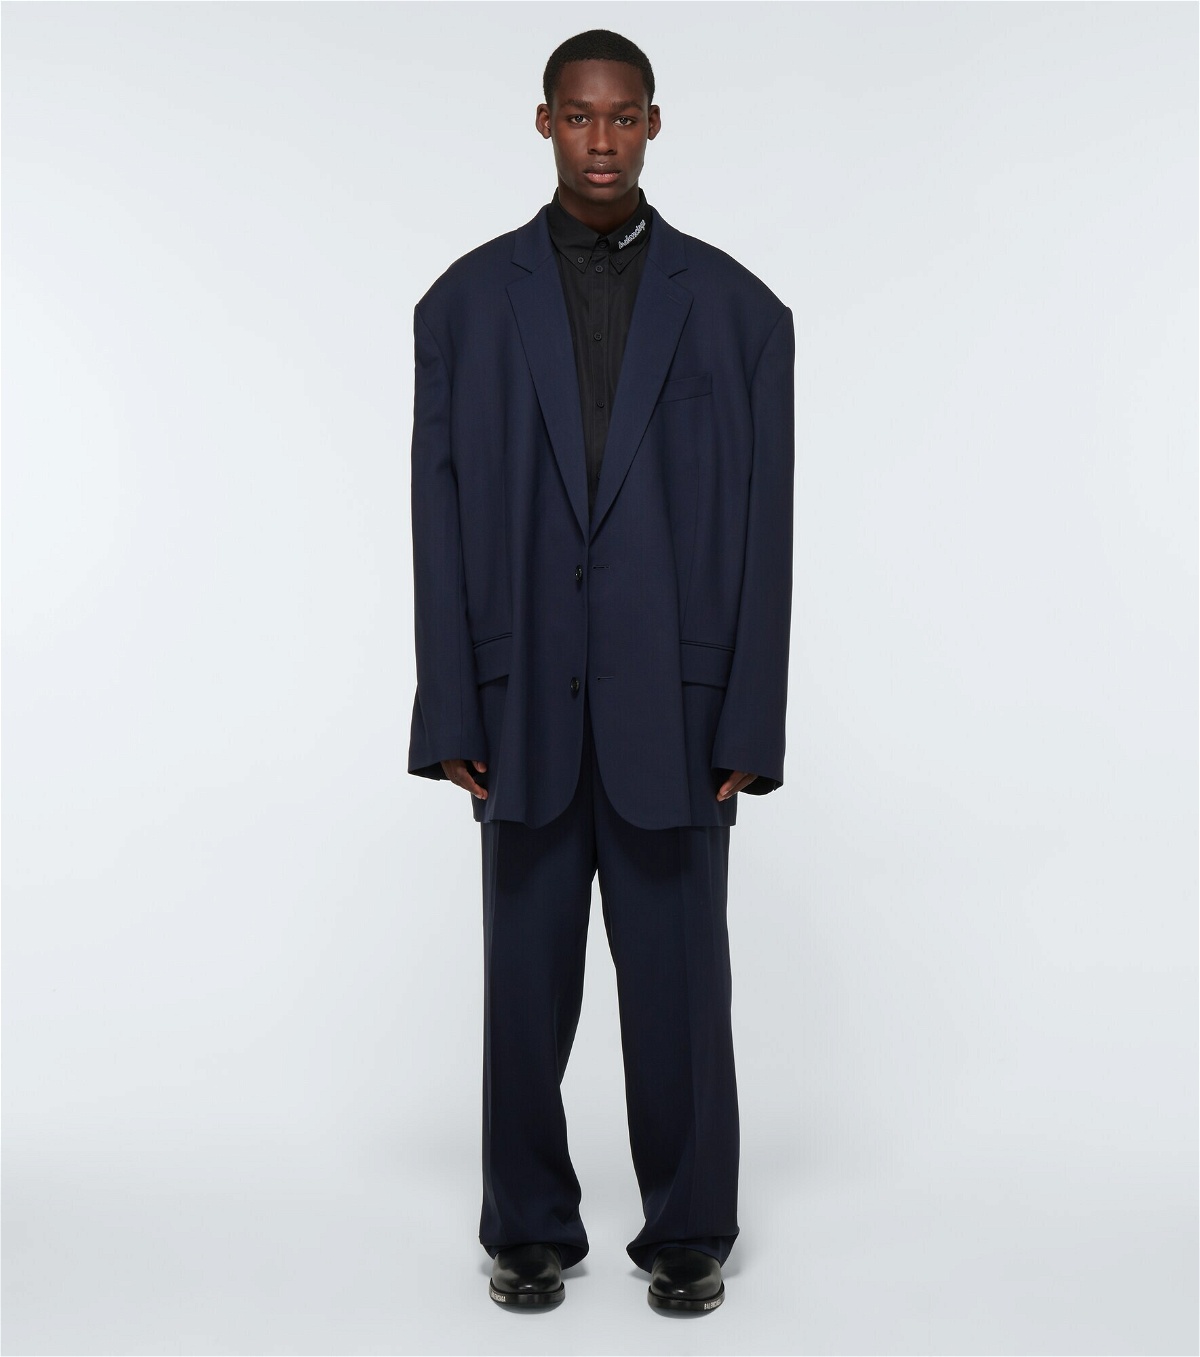 Balenciaga - Large fit tailored wool pants